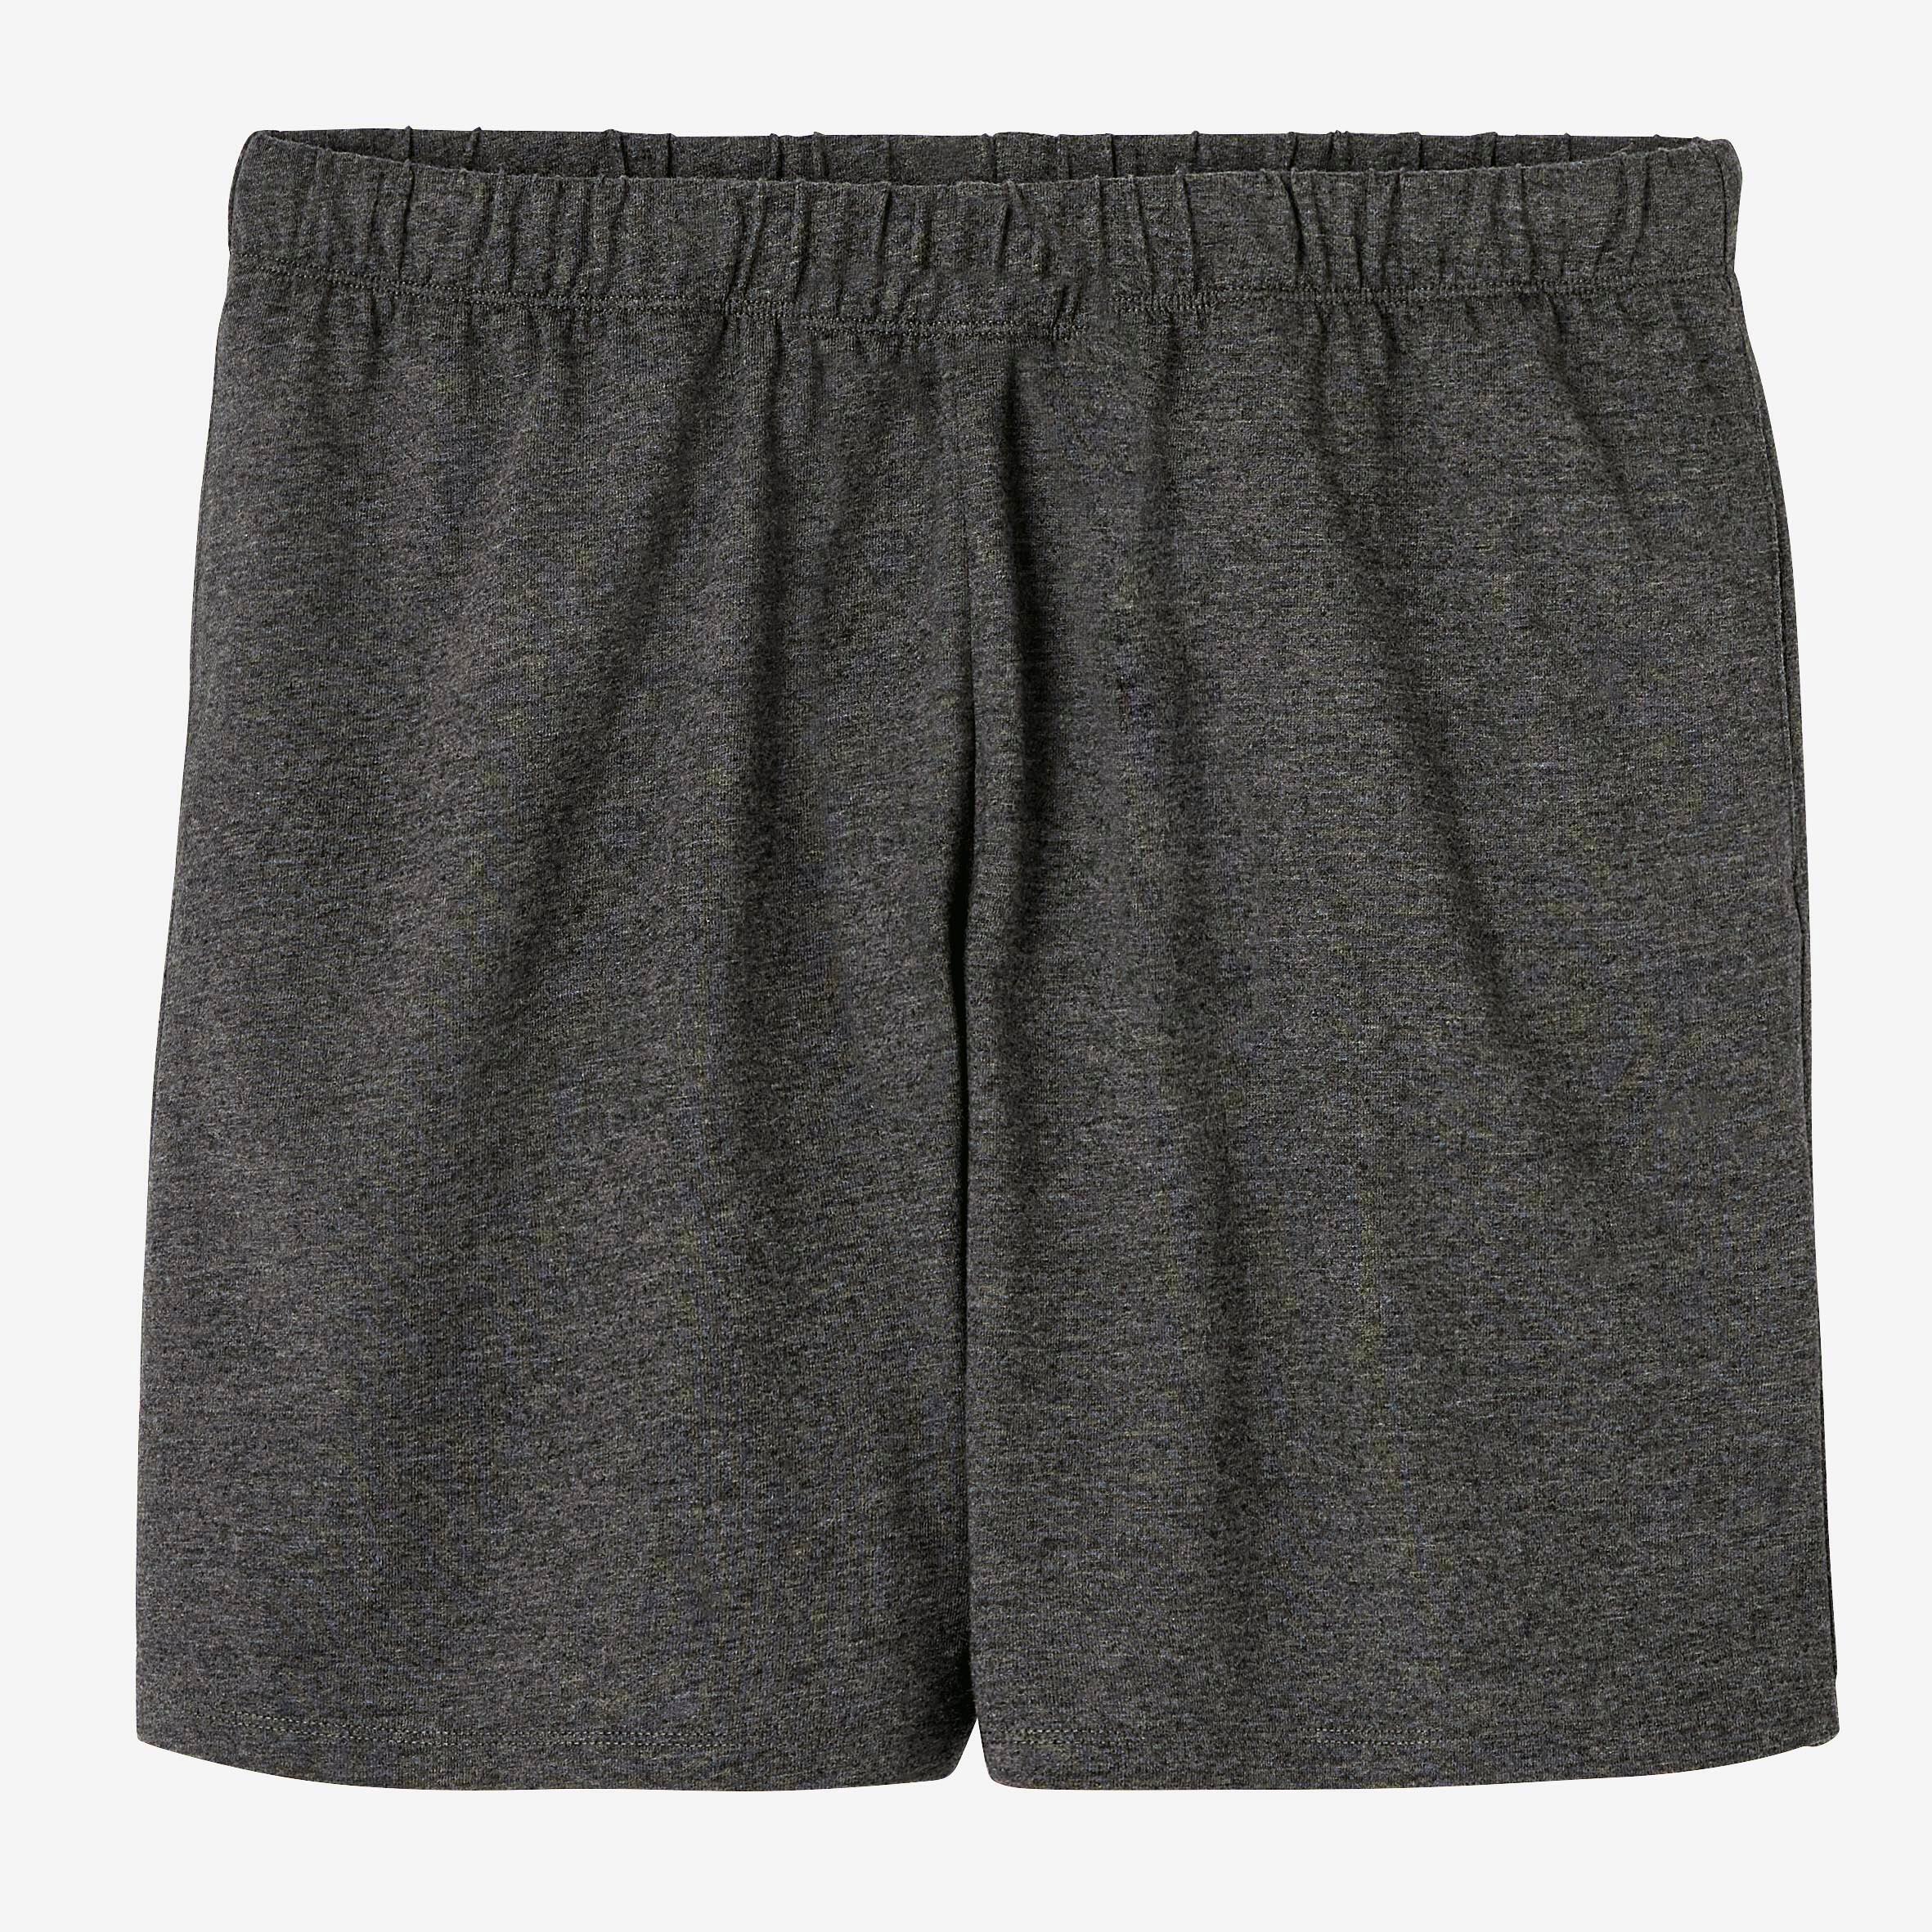 Men's Fitness Shorts 100 - Dark Grey 5/5